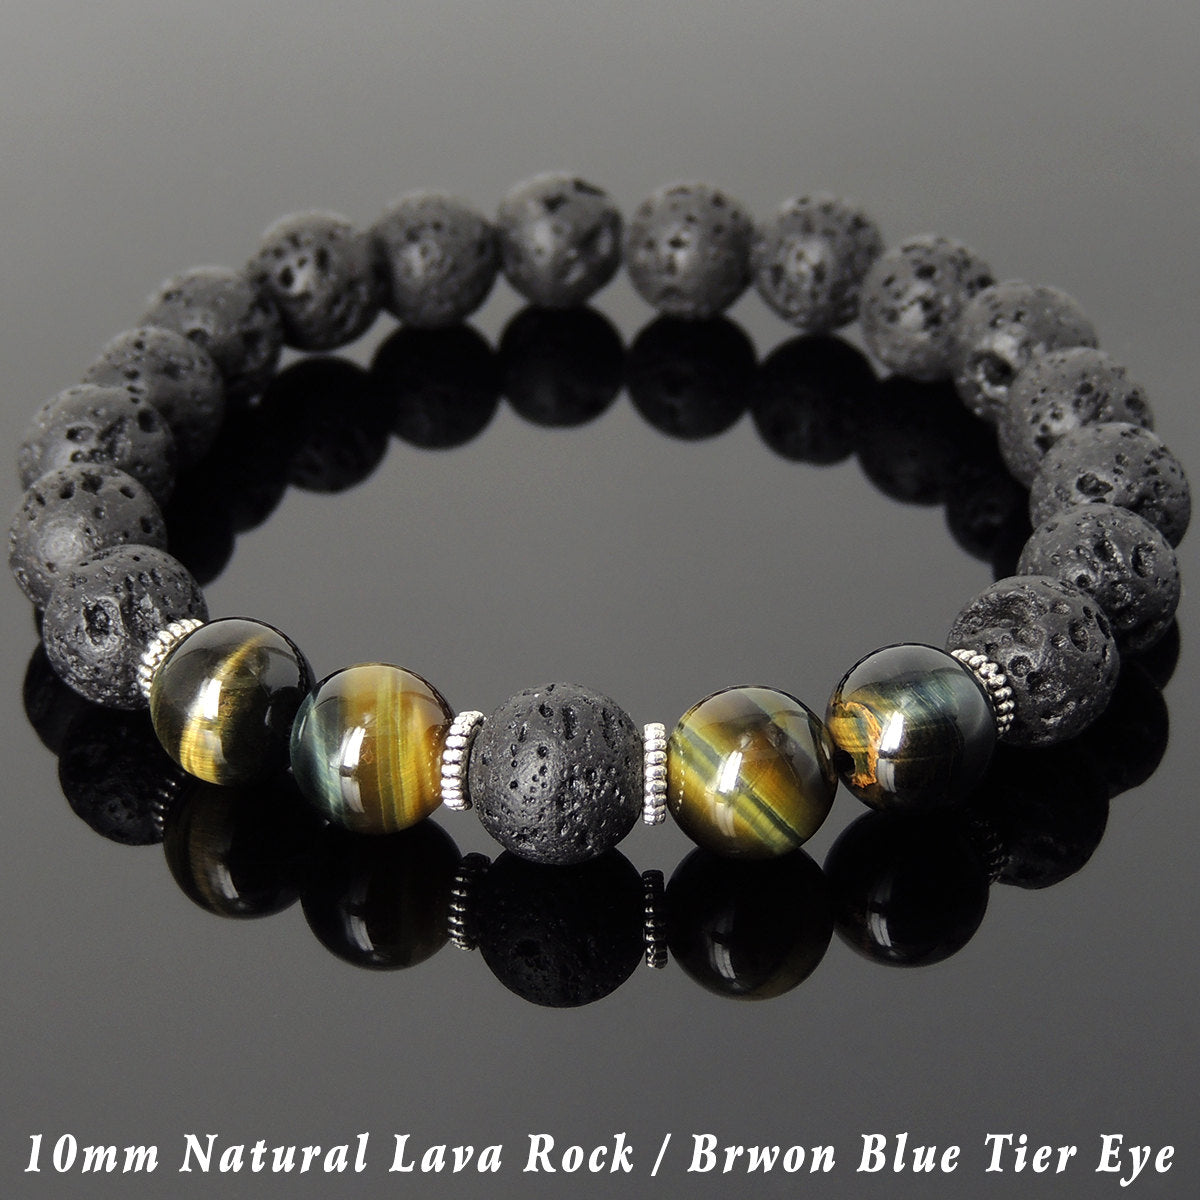 10mm Brown Blue Tiger Eye & Lava Rock Healing Stone Bracelet with Tibetan Silver Spacers - Handmade by Gem & Silver TSB279